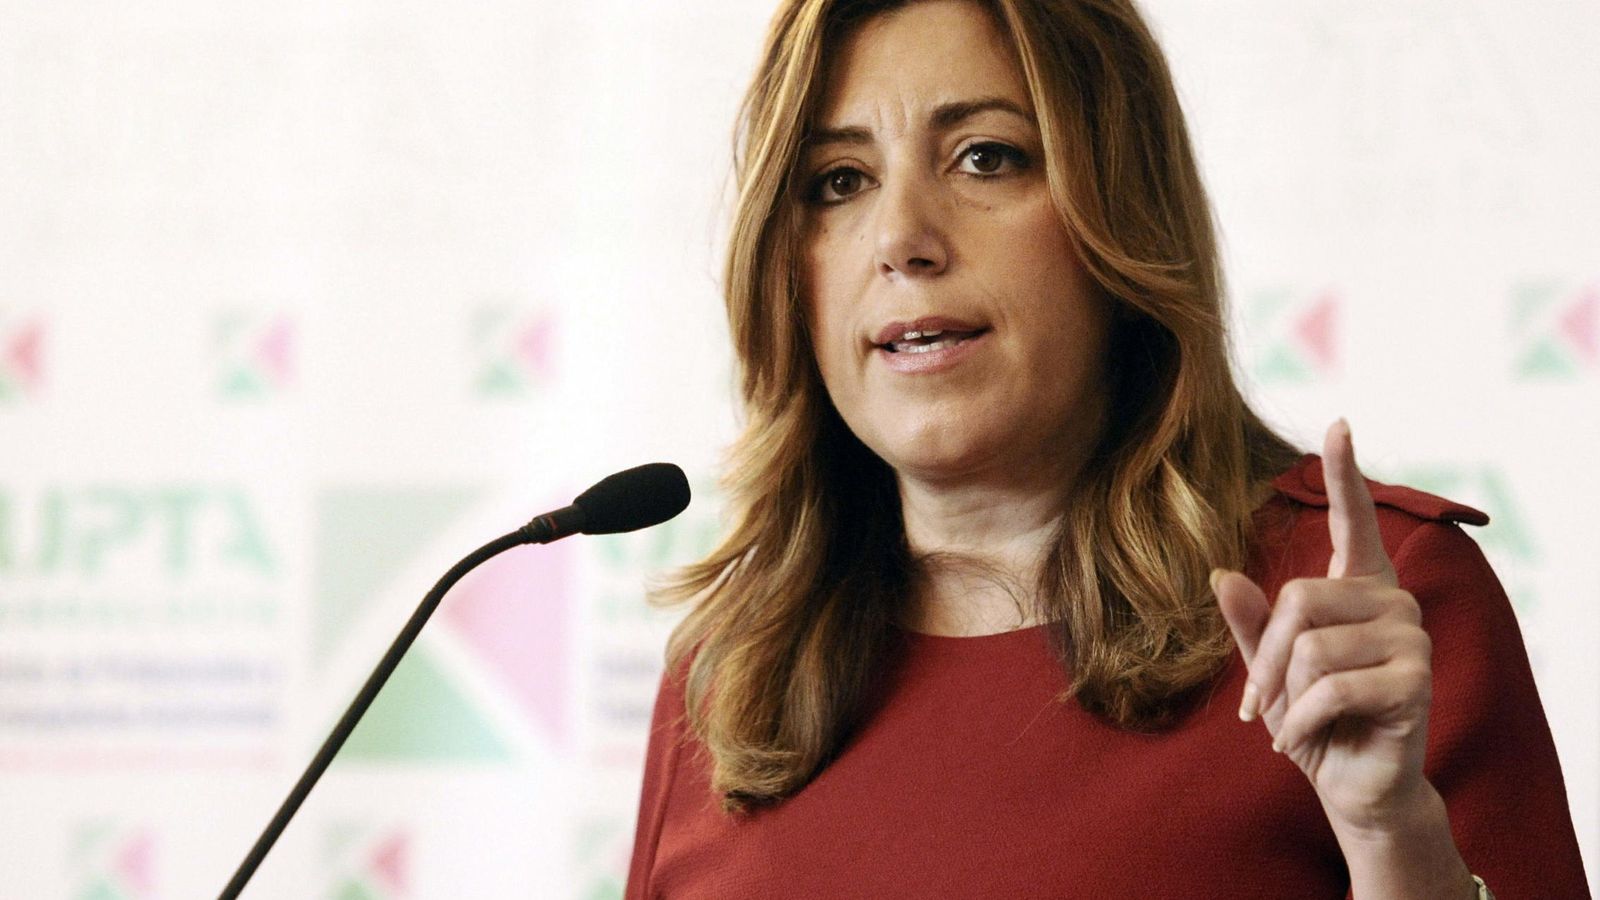 Foto: La presidenta de la Junta, Susana Díaz. (EFE)